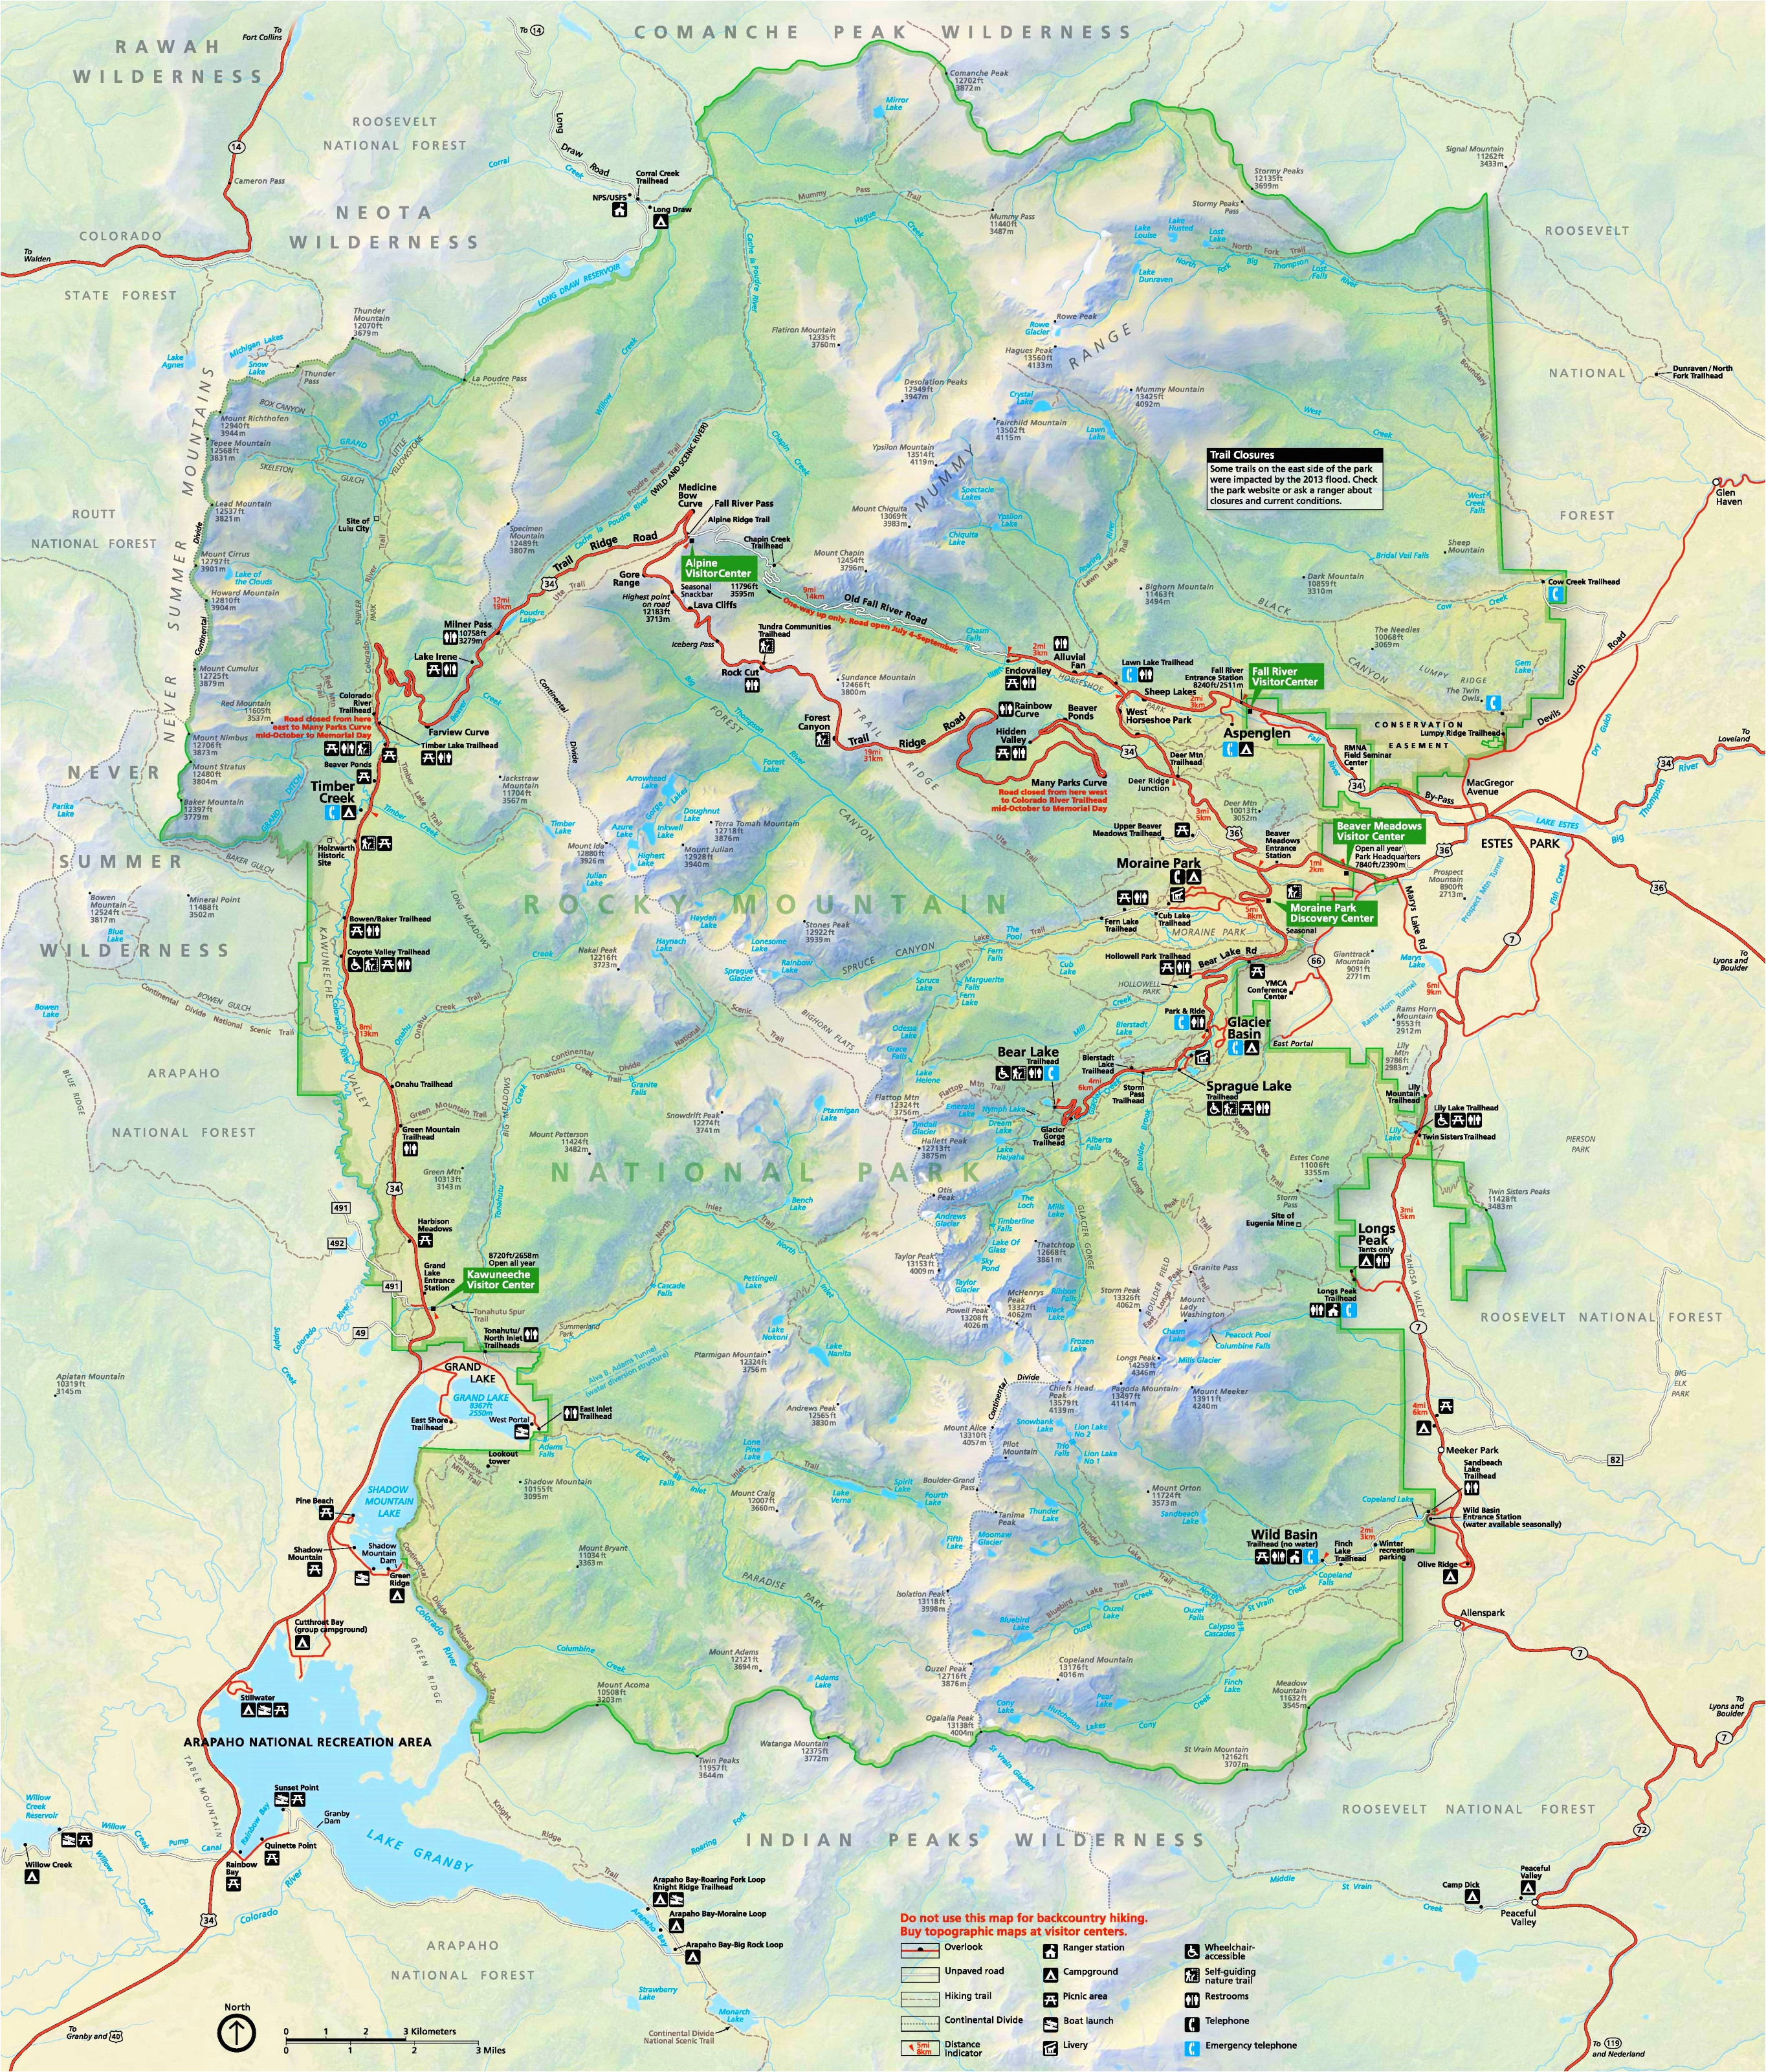 Map Of Rocky Mount north Carolina | secretmuseum